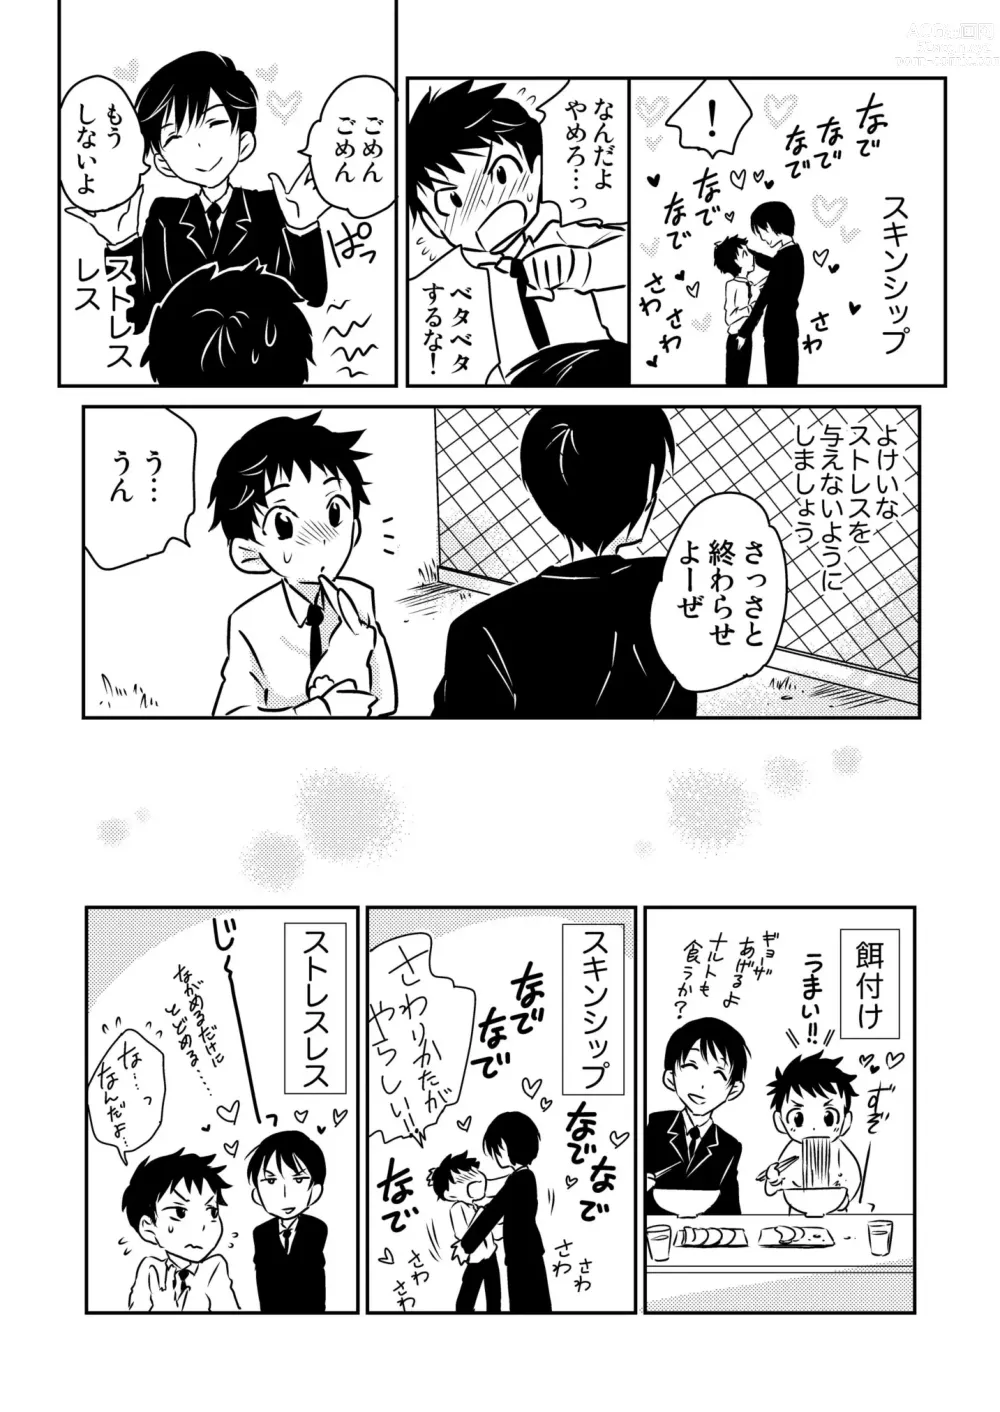 Page 8 of doujinshi Usagi no Koe 3